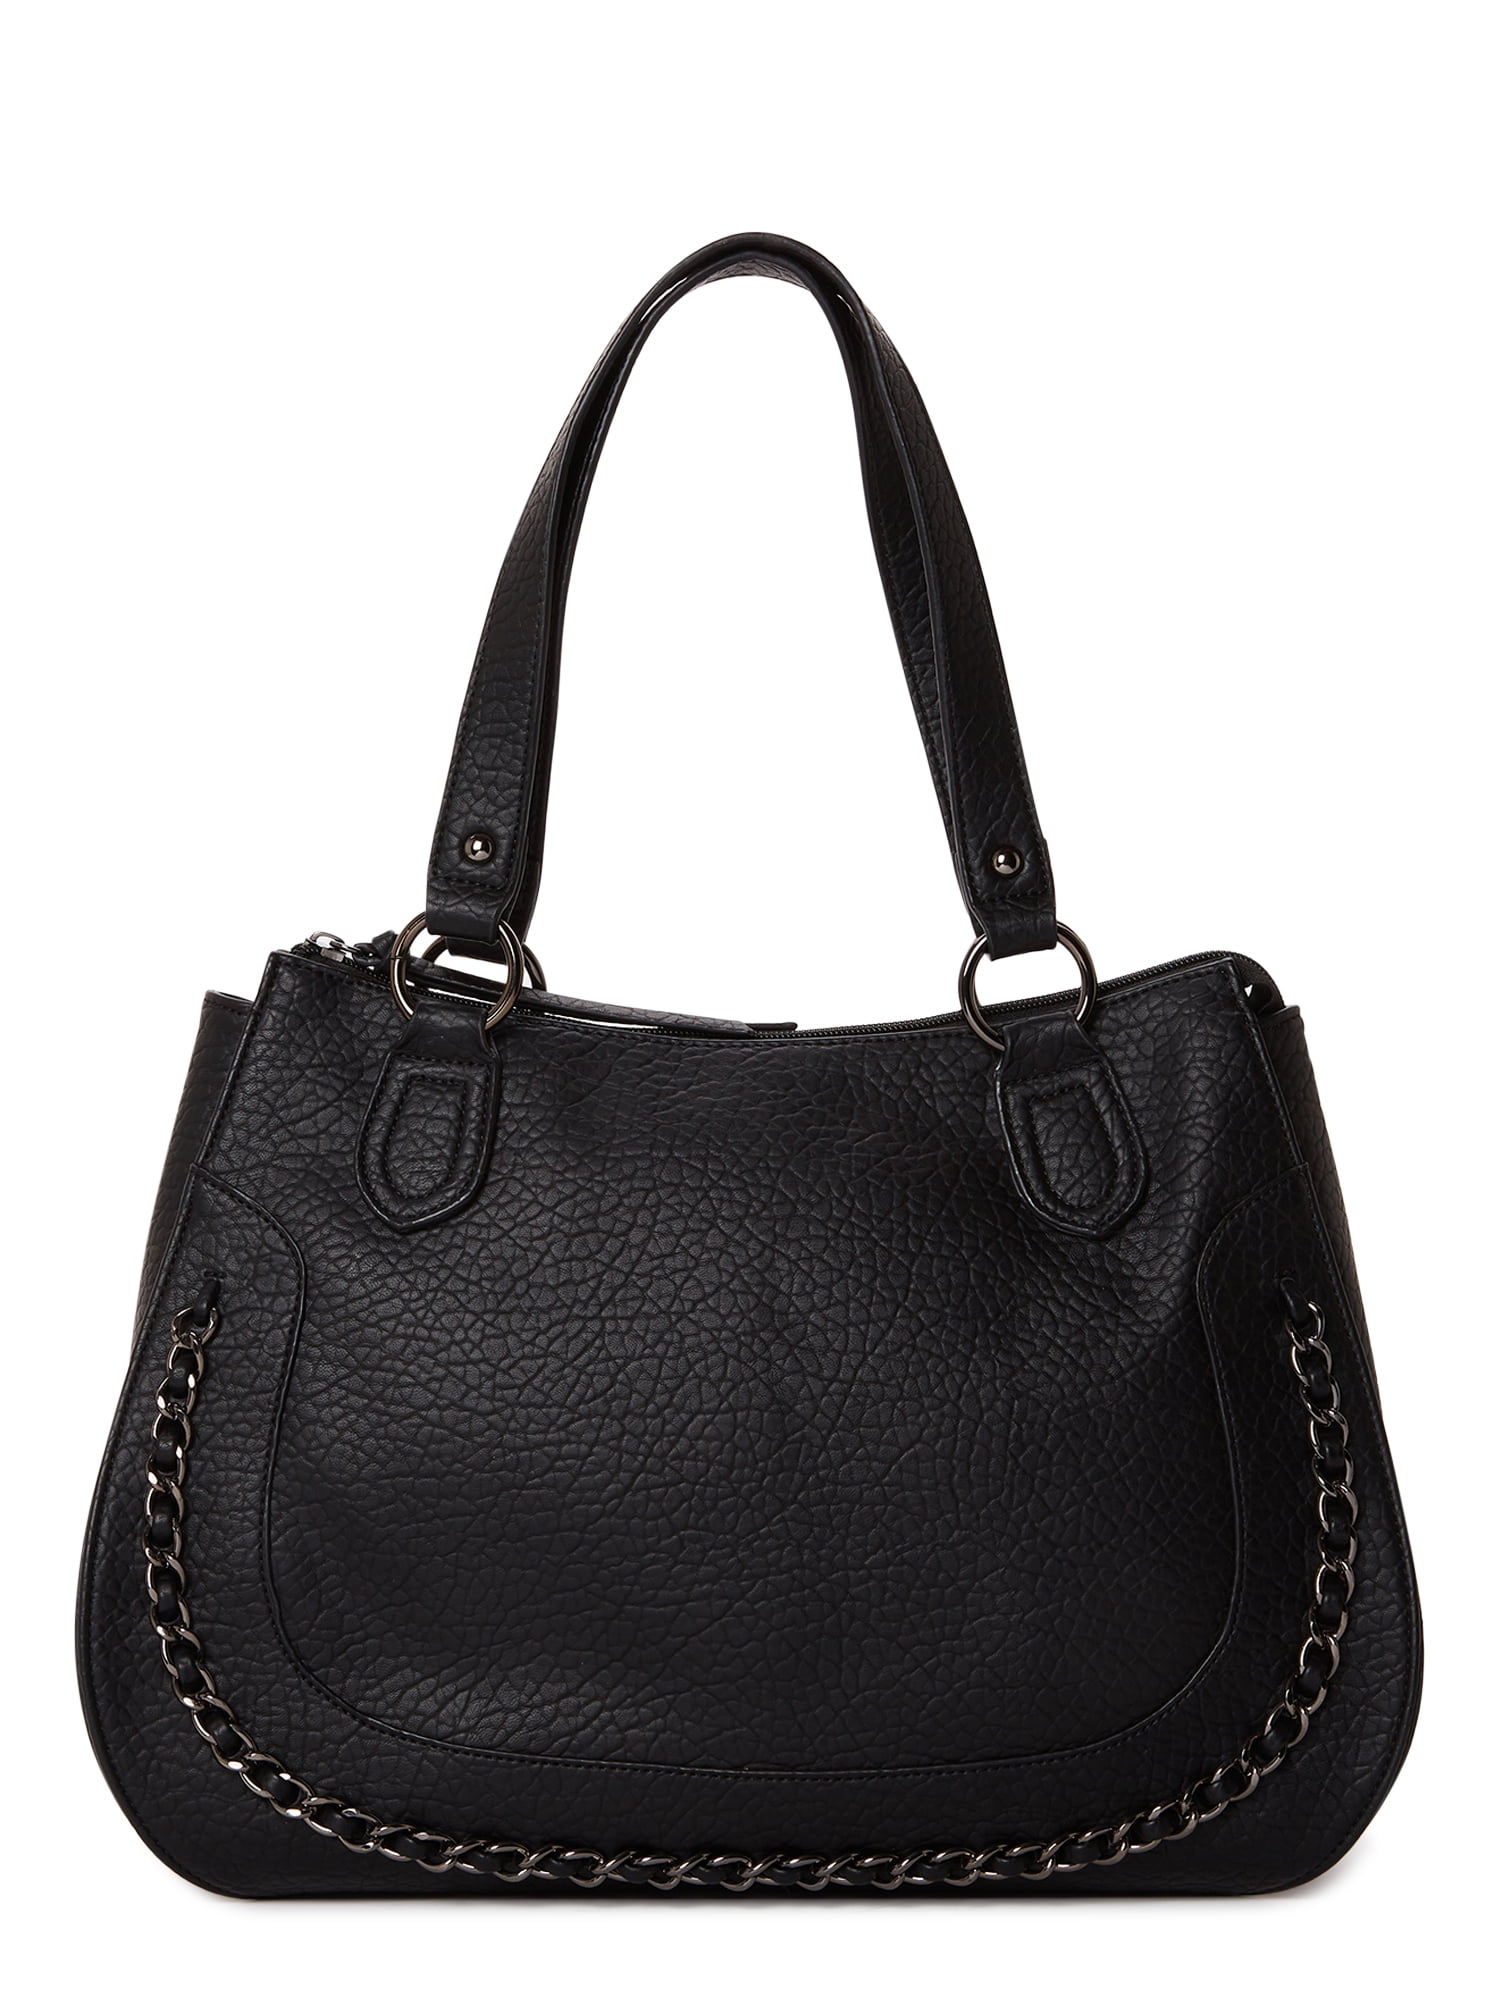 Jessica Simpson Women's Adult Charlie Satchel Handbag Meteorite Black 